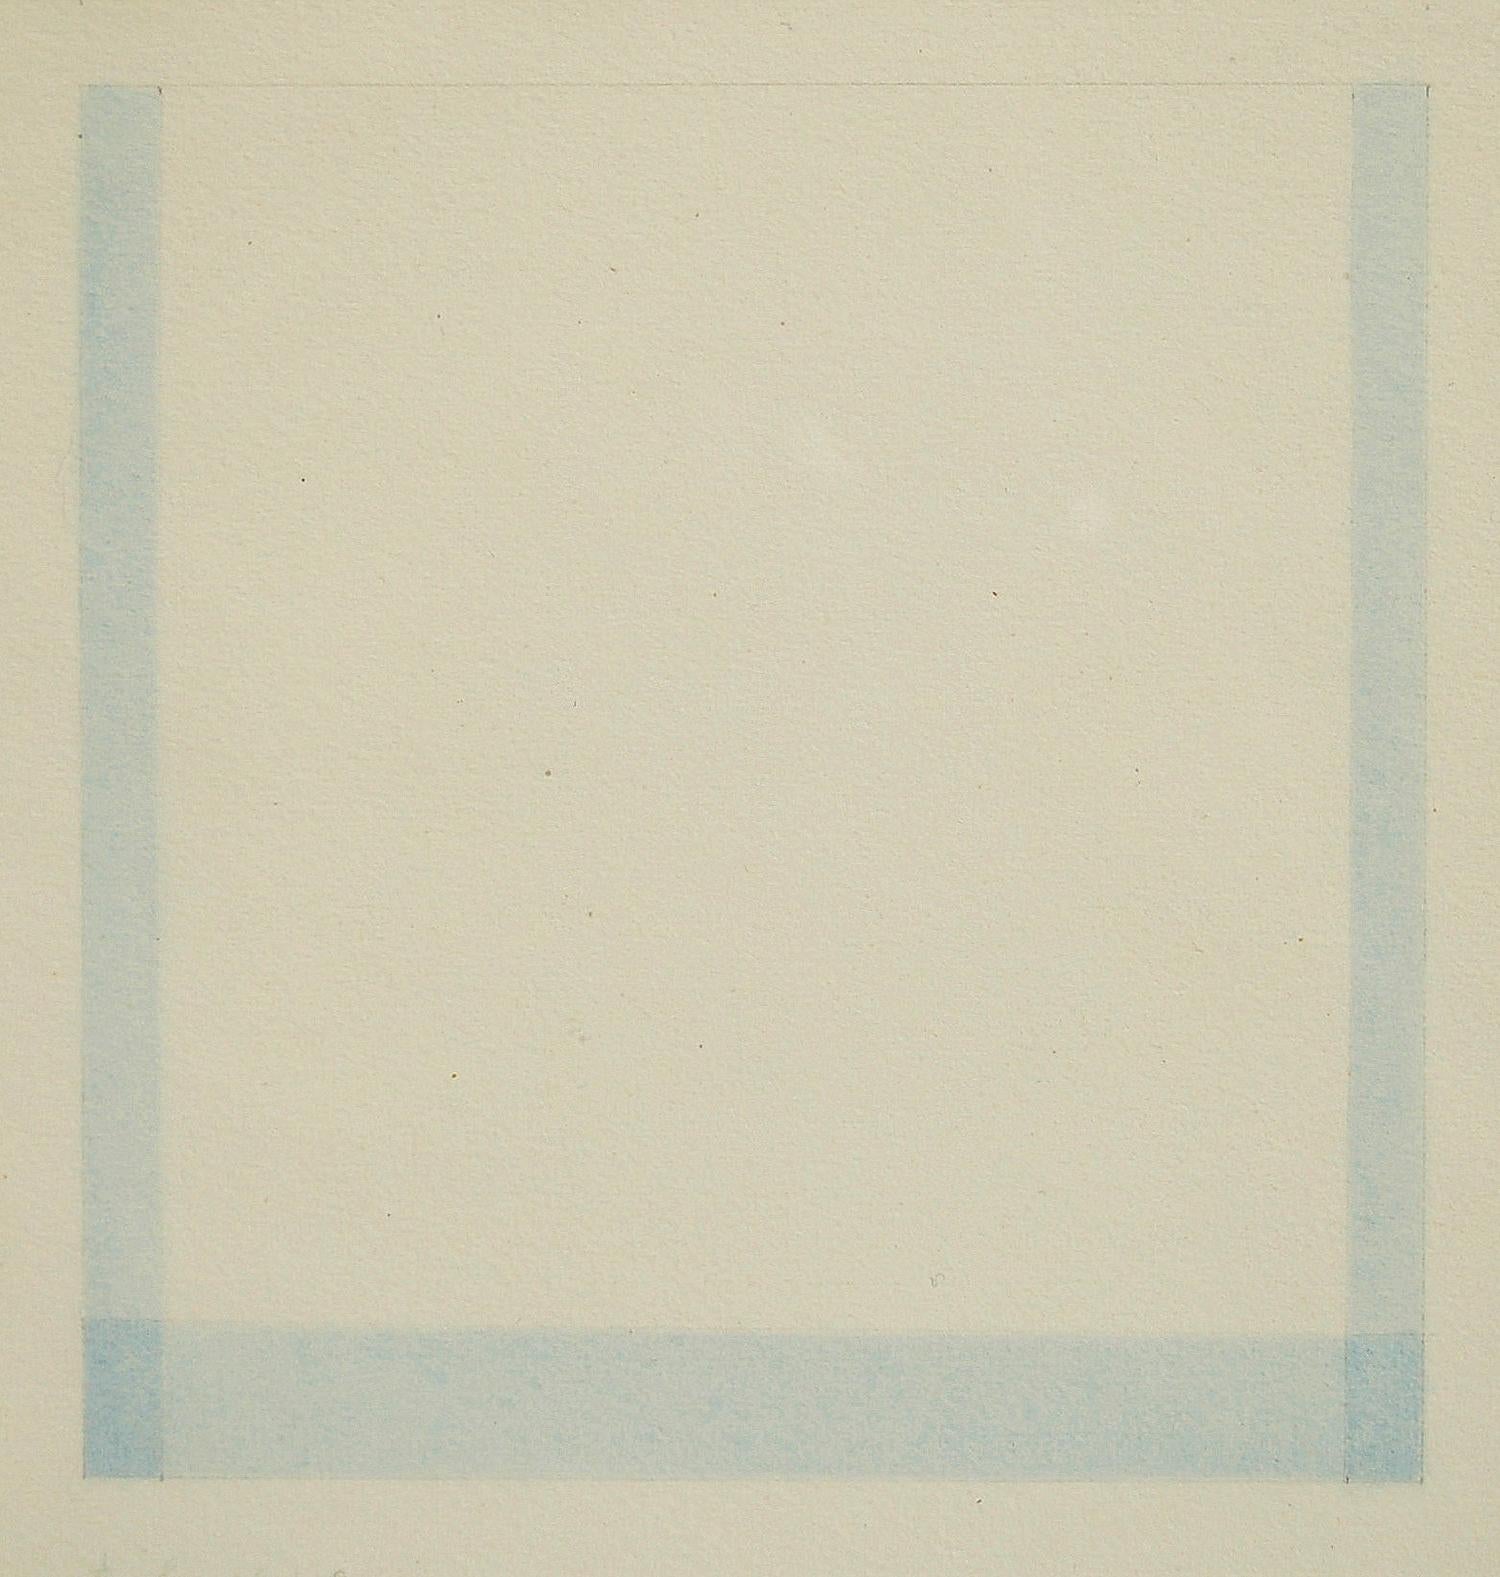 Antonio Calderara Abstract Drawing - In the square square, abstraction, Italian art, minimalism 1972